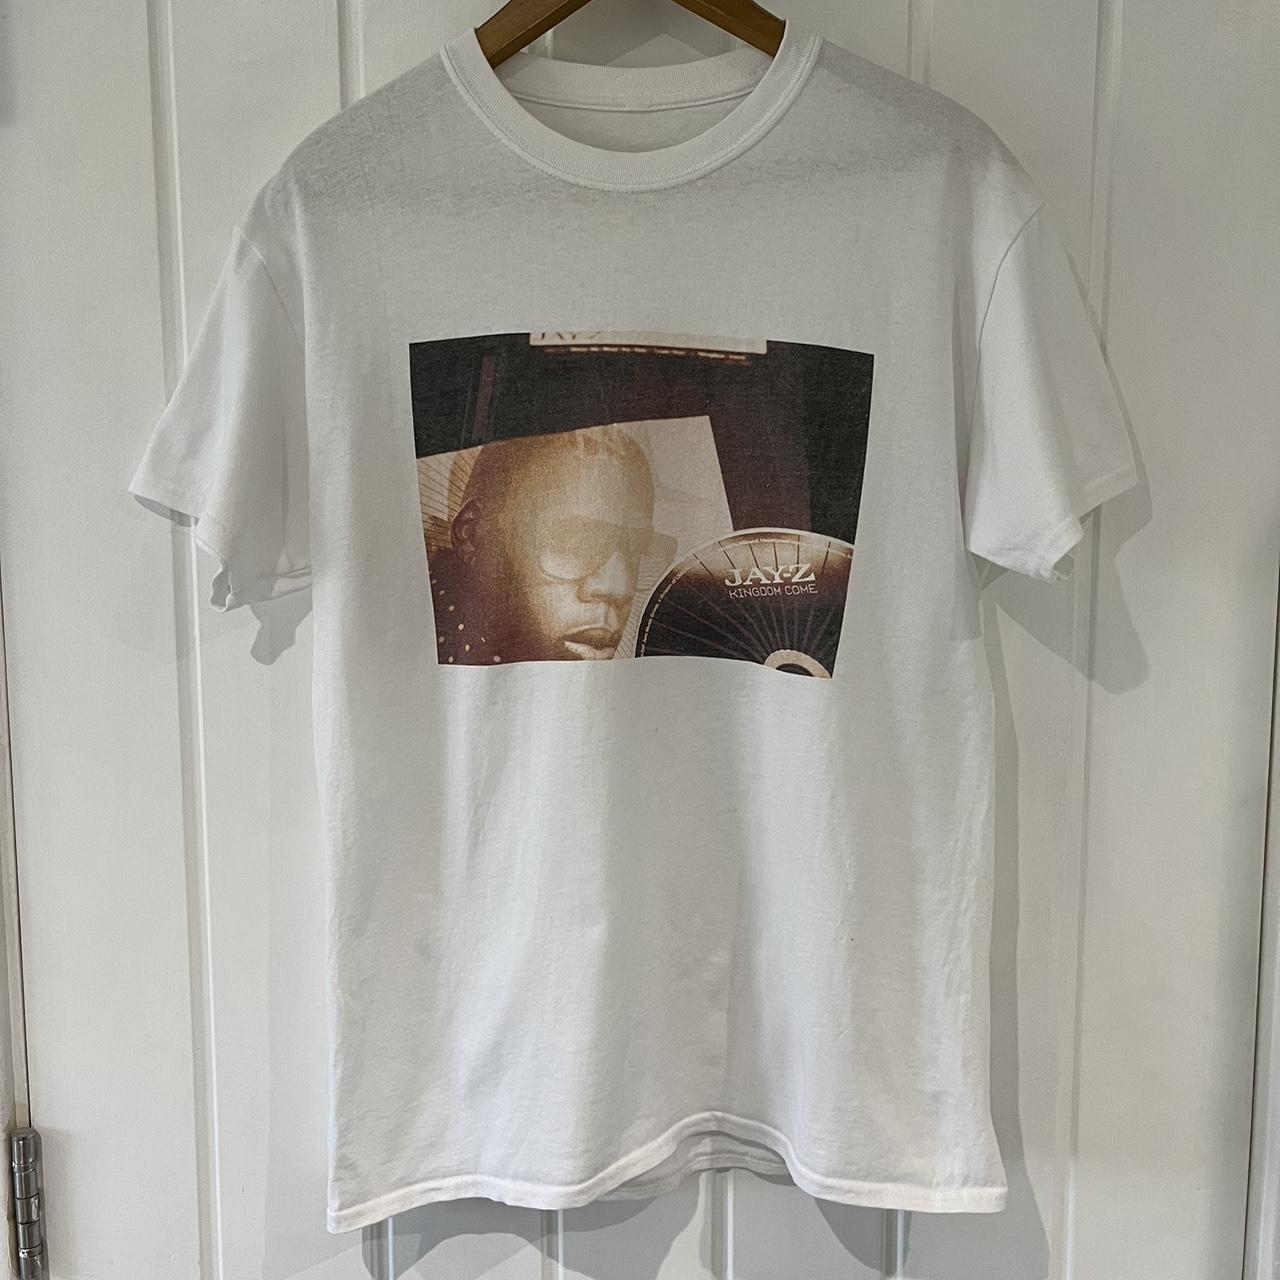 Jay Z T shirt - Depop